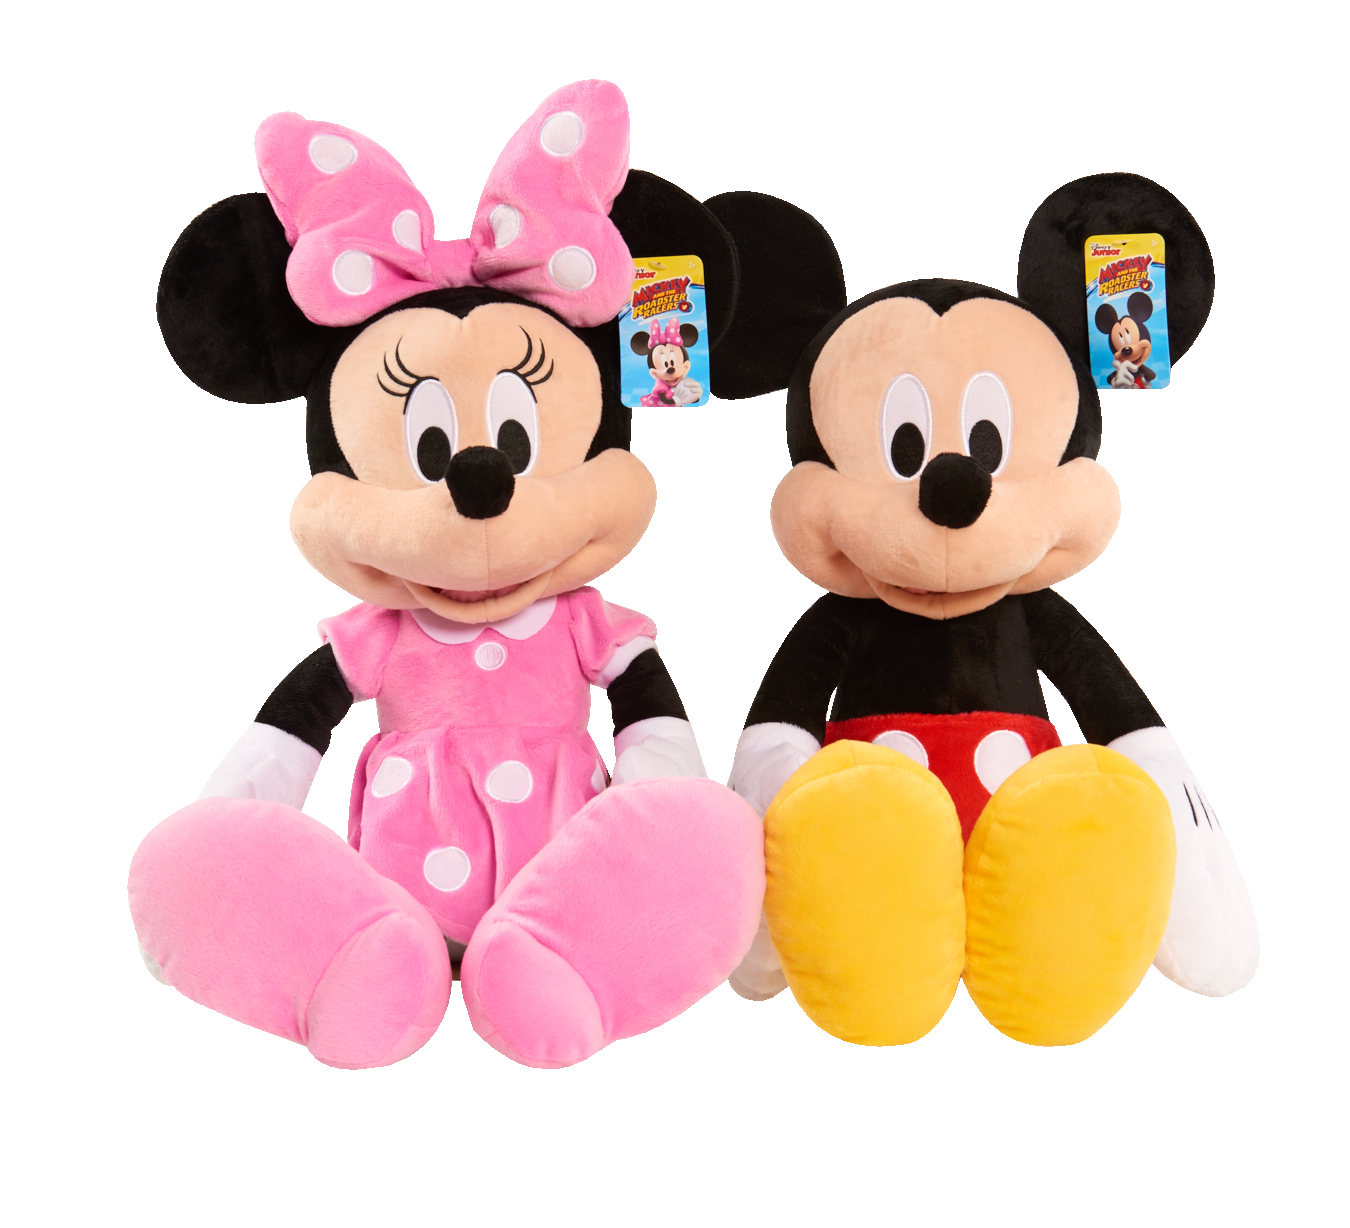 Disney Minnie Mouse Large Plush - image 4 of 4